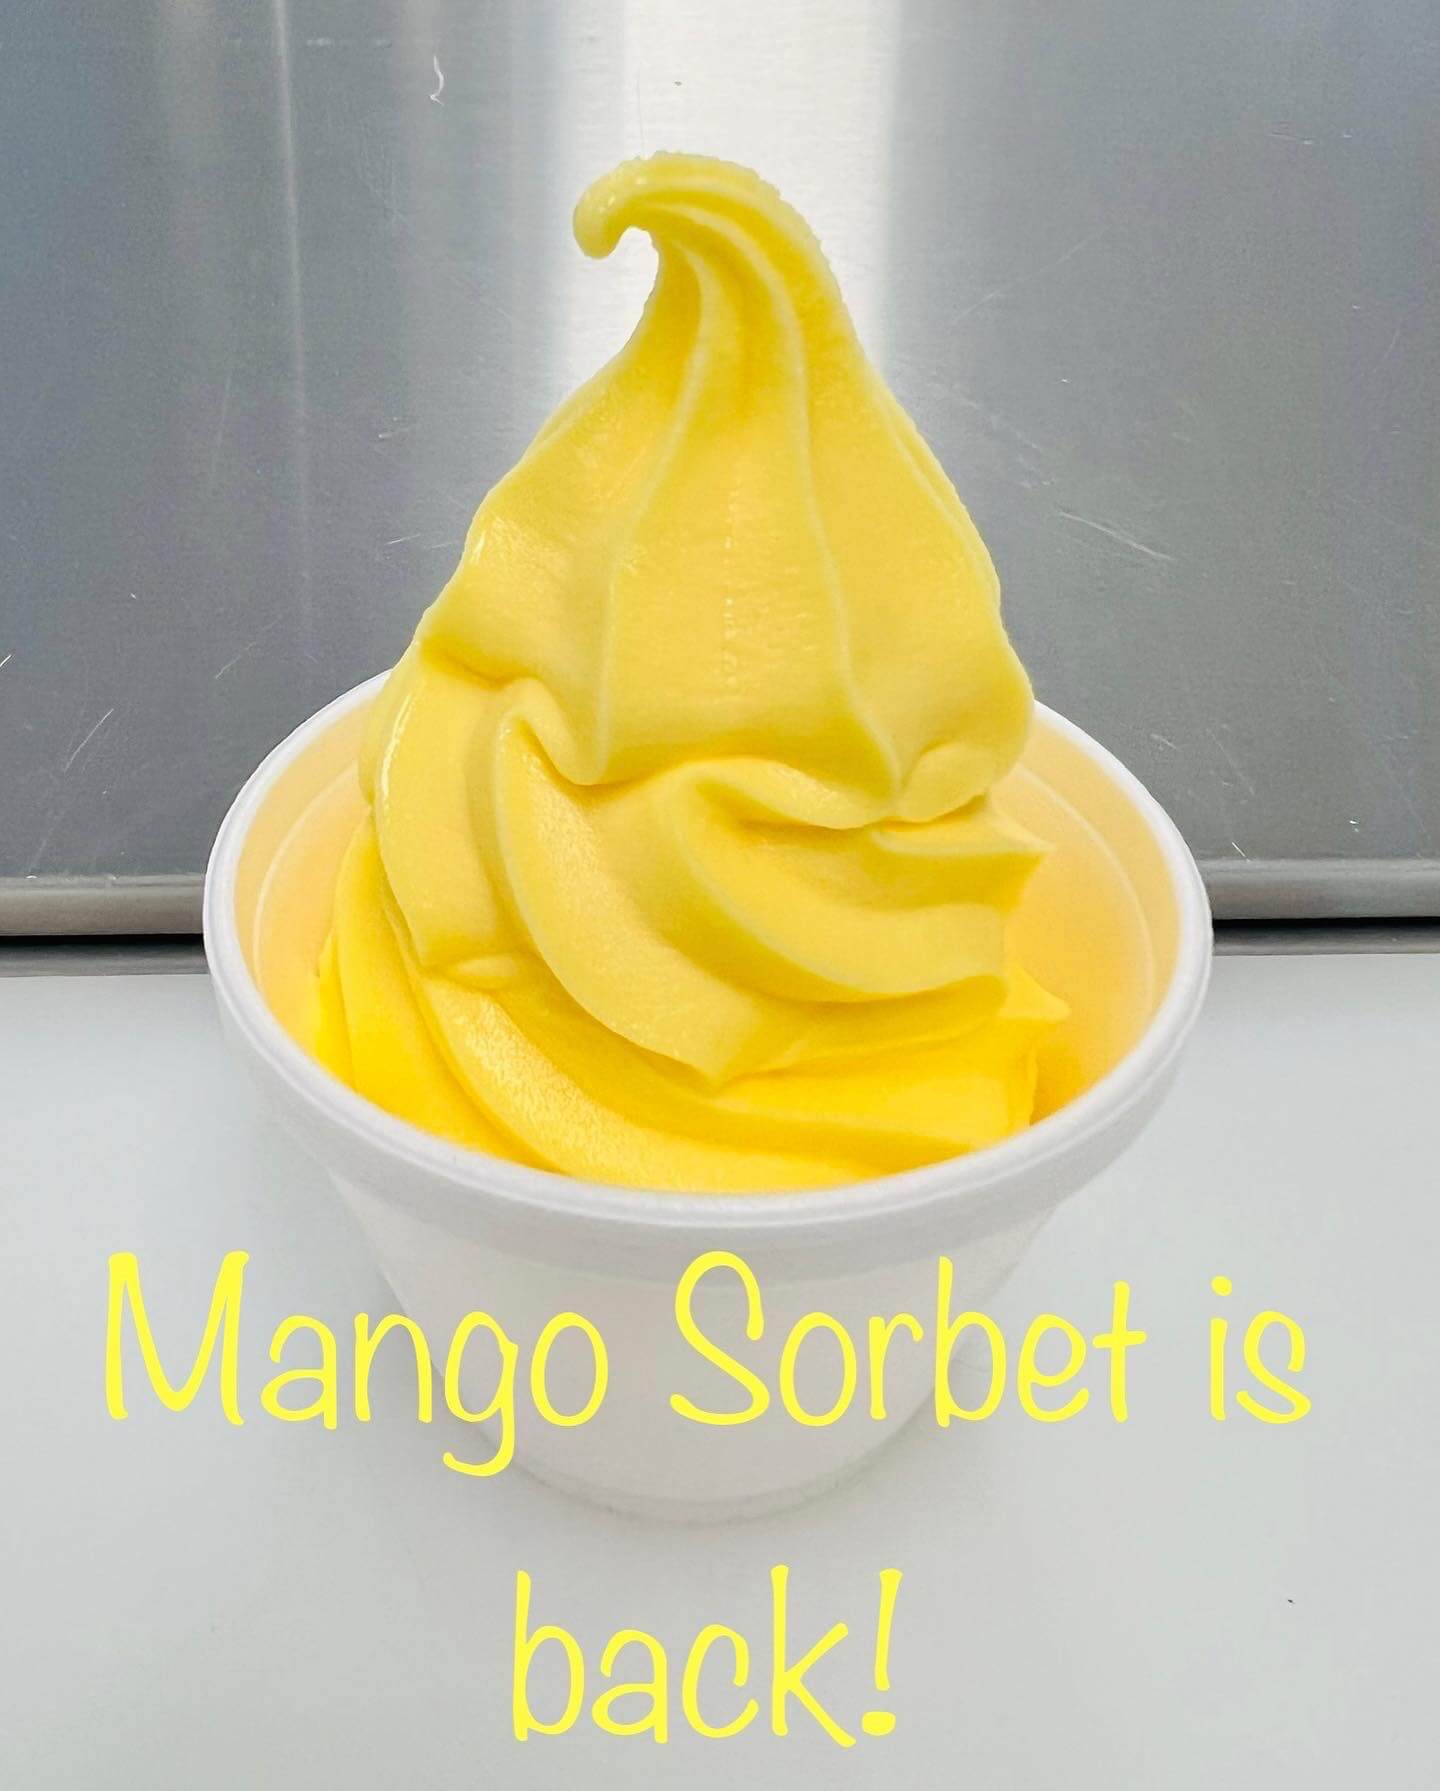 The triumphant return of mango sorbet